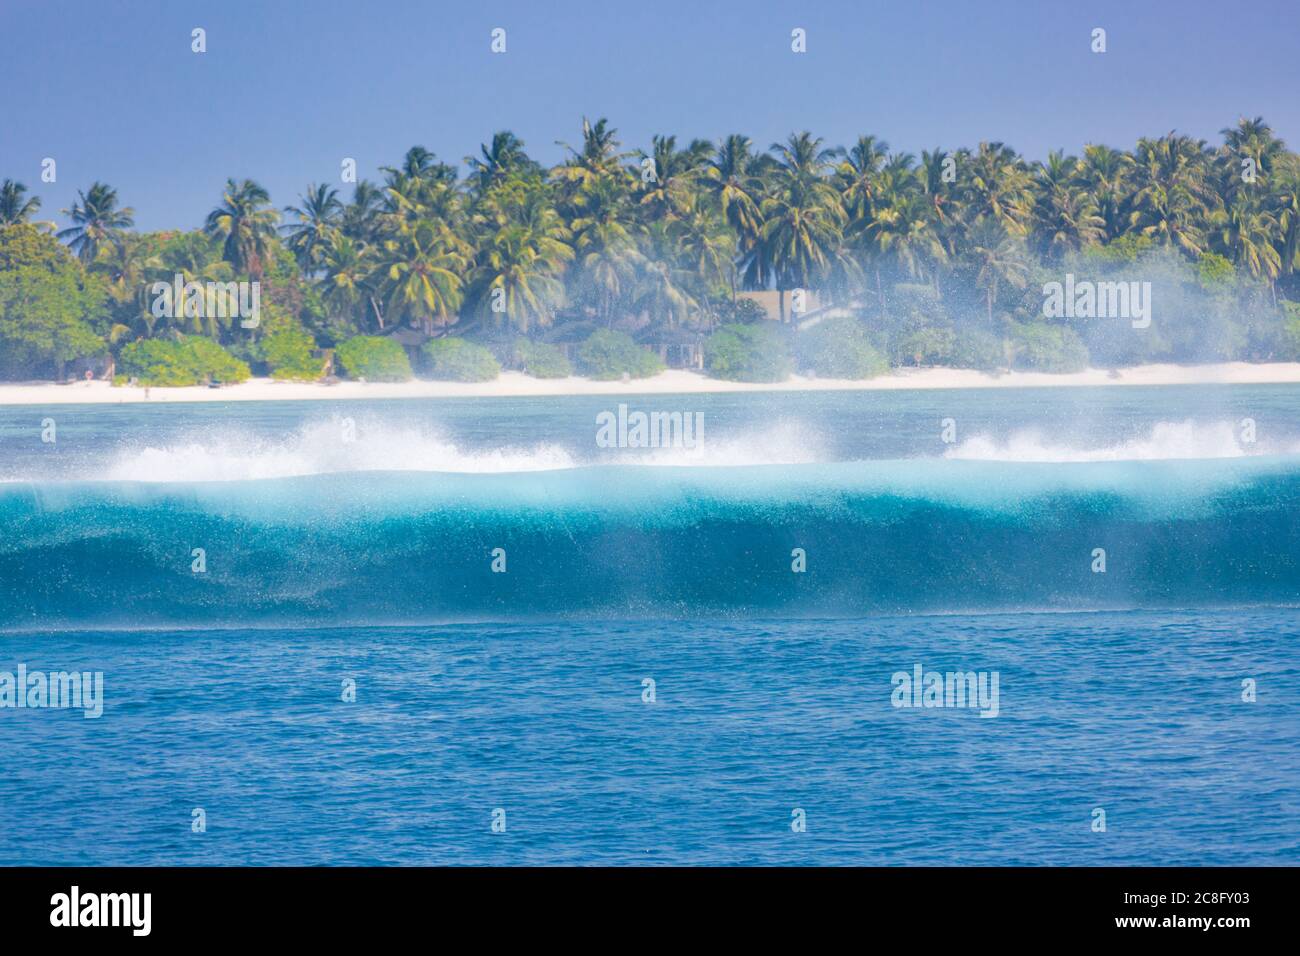 Tropical island with waves splashing. Tropical sea, palm trees and blue sky Stock Photo